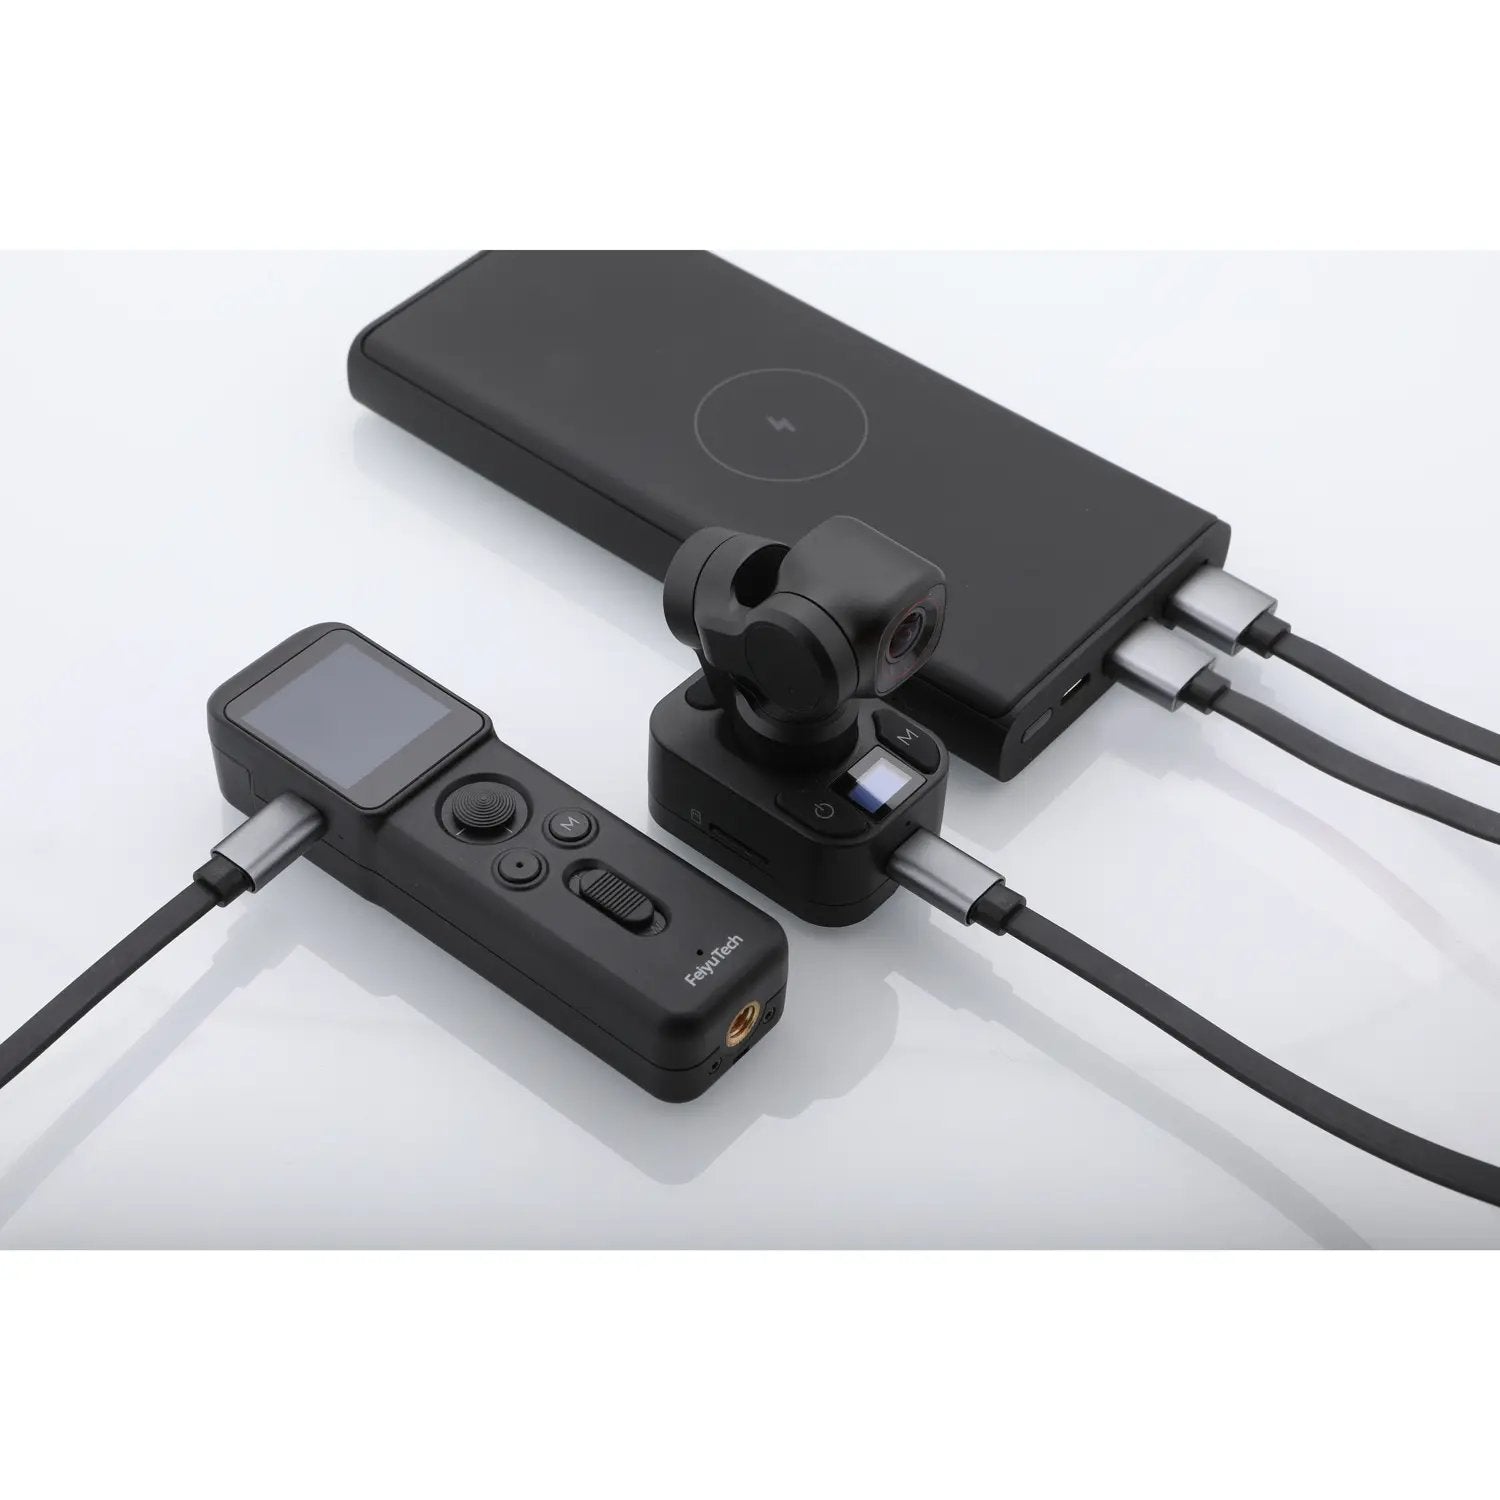 Use power bank to charge Feiyu Pocket 3 camera and handle anytime, anywhere